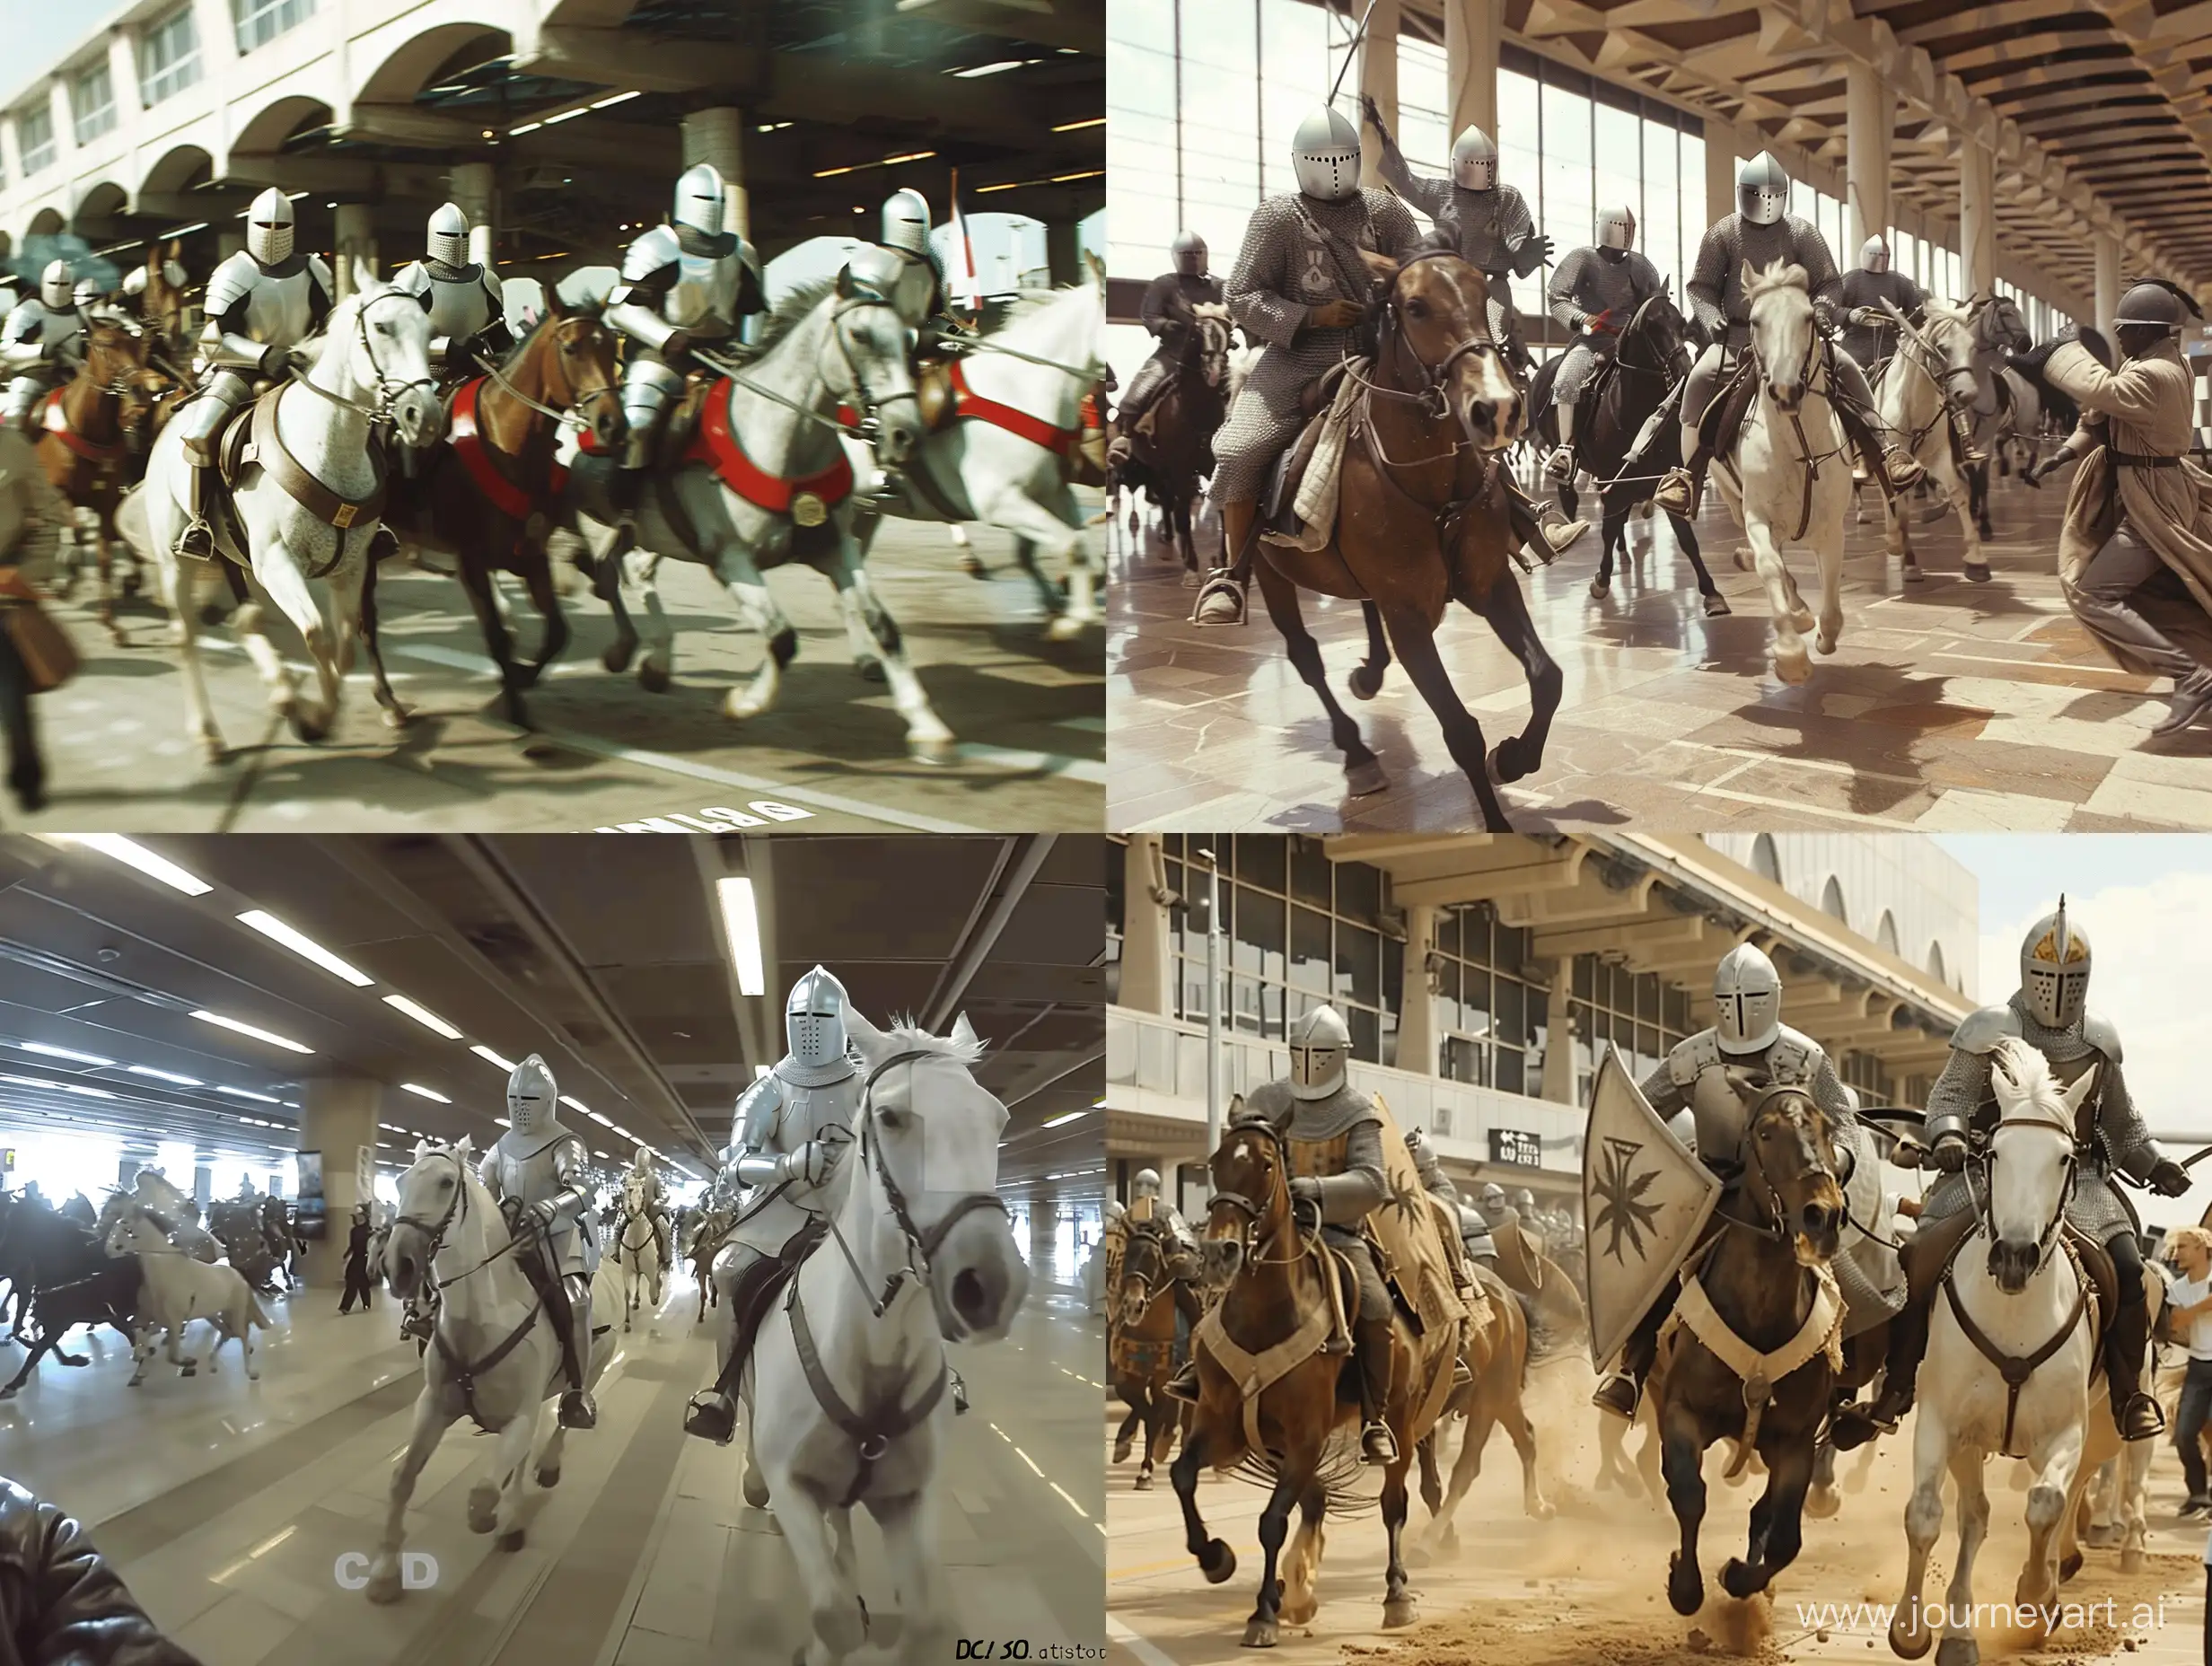 Medieval-Templar-Knights-Riding-Horses-Amid-Airport-Chaos